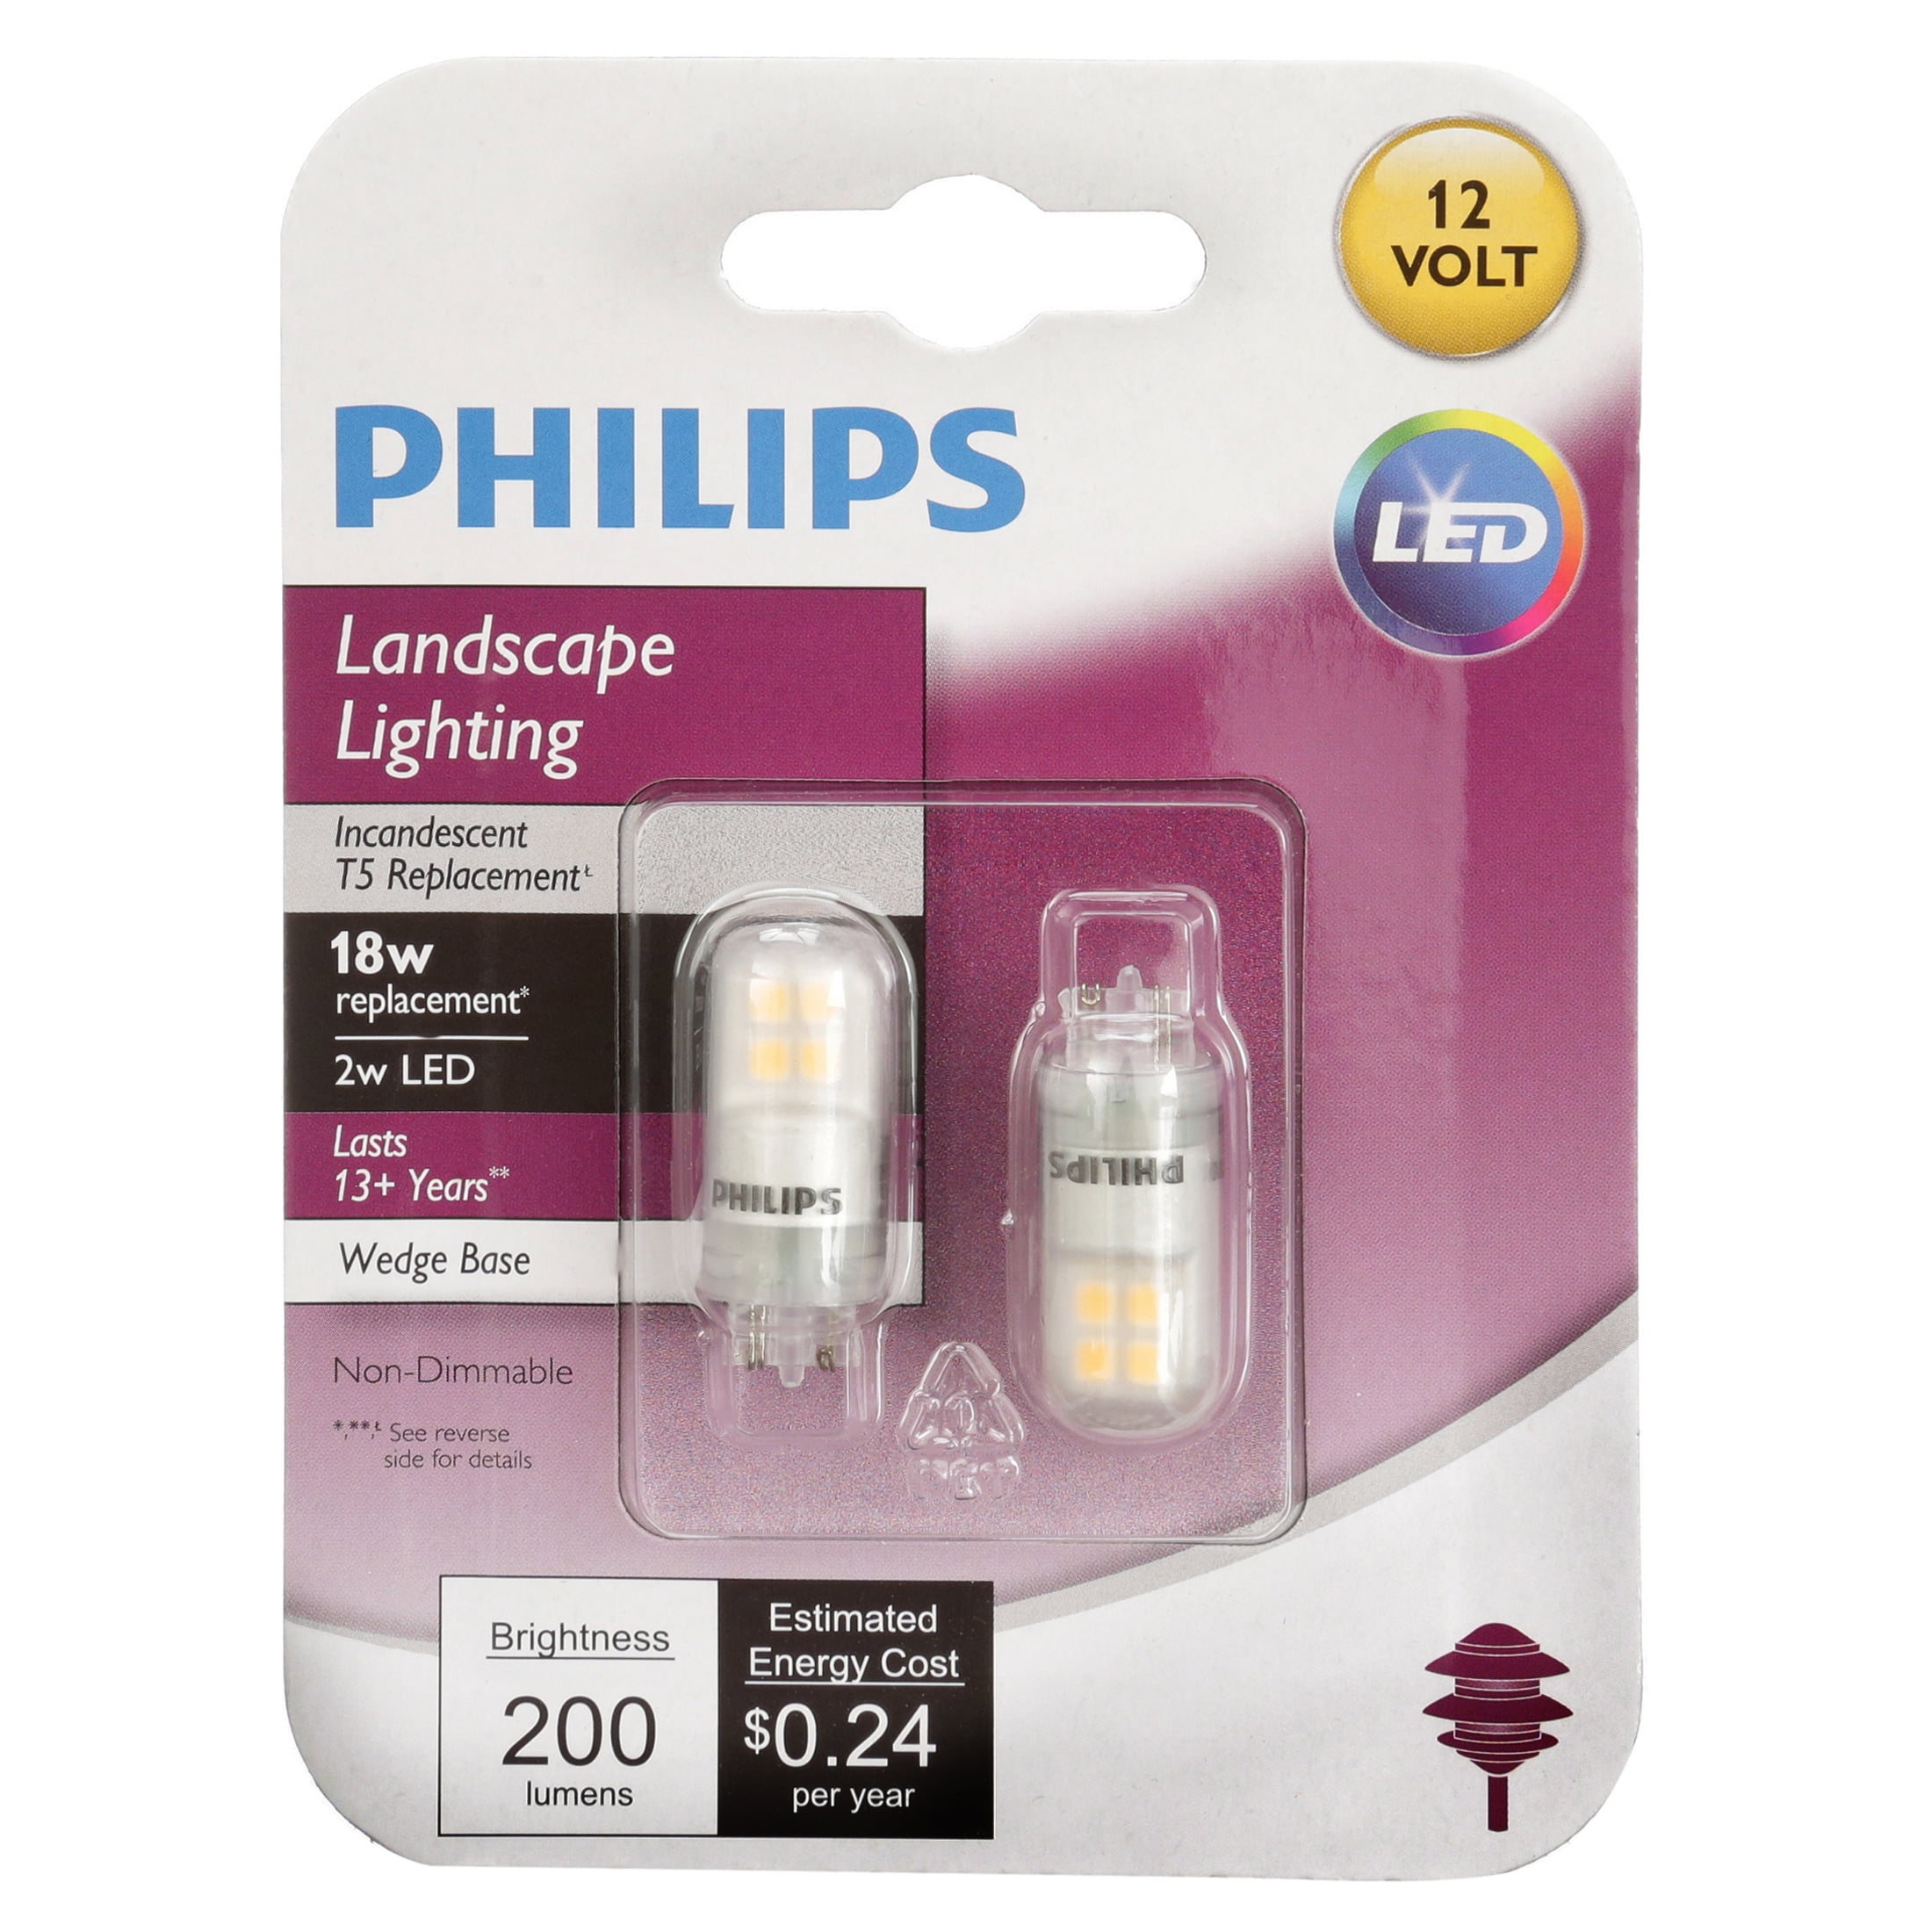 Led Landscape Lighting Bulb 18w T5, Led Landscape Bulbs